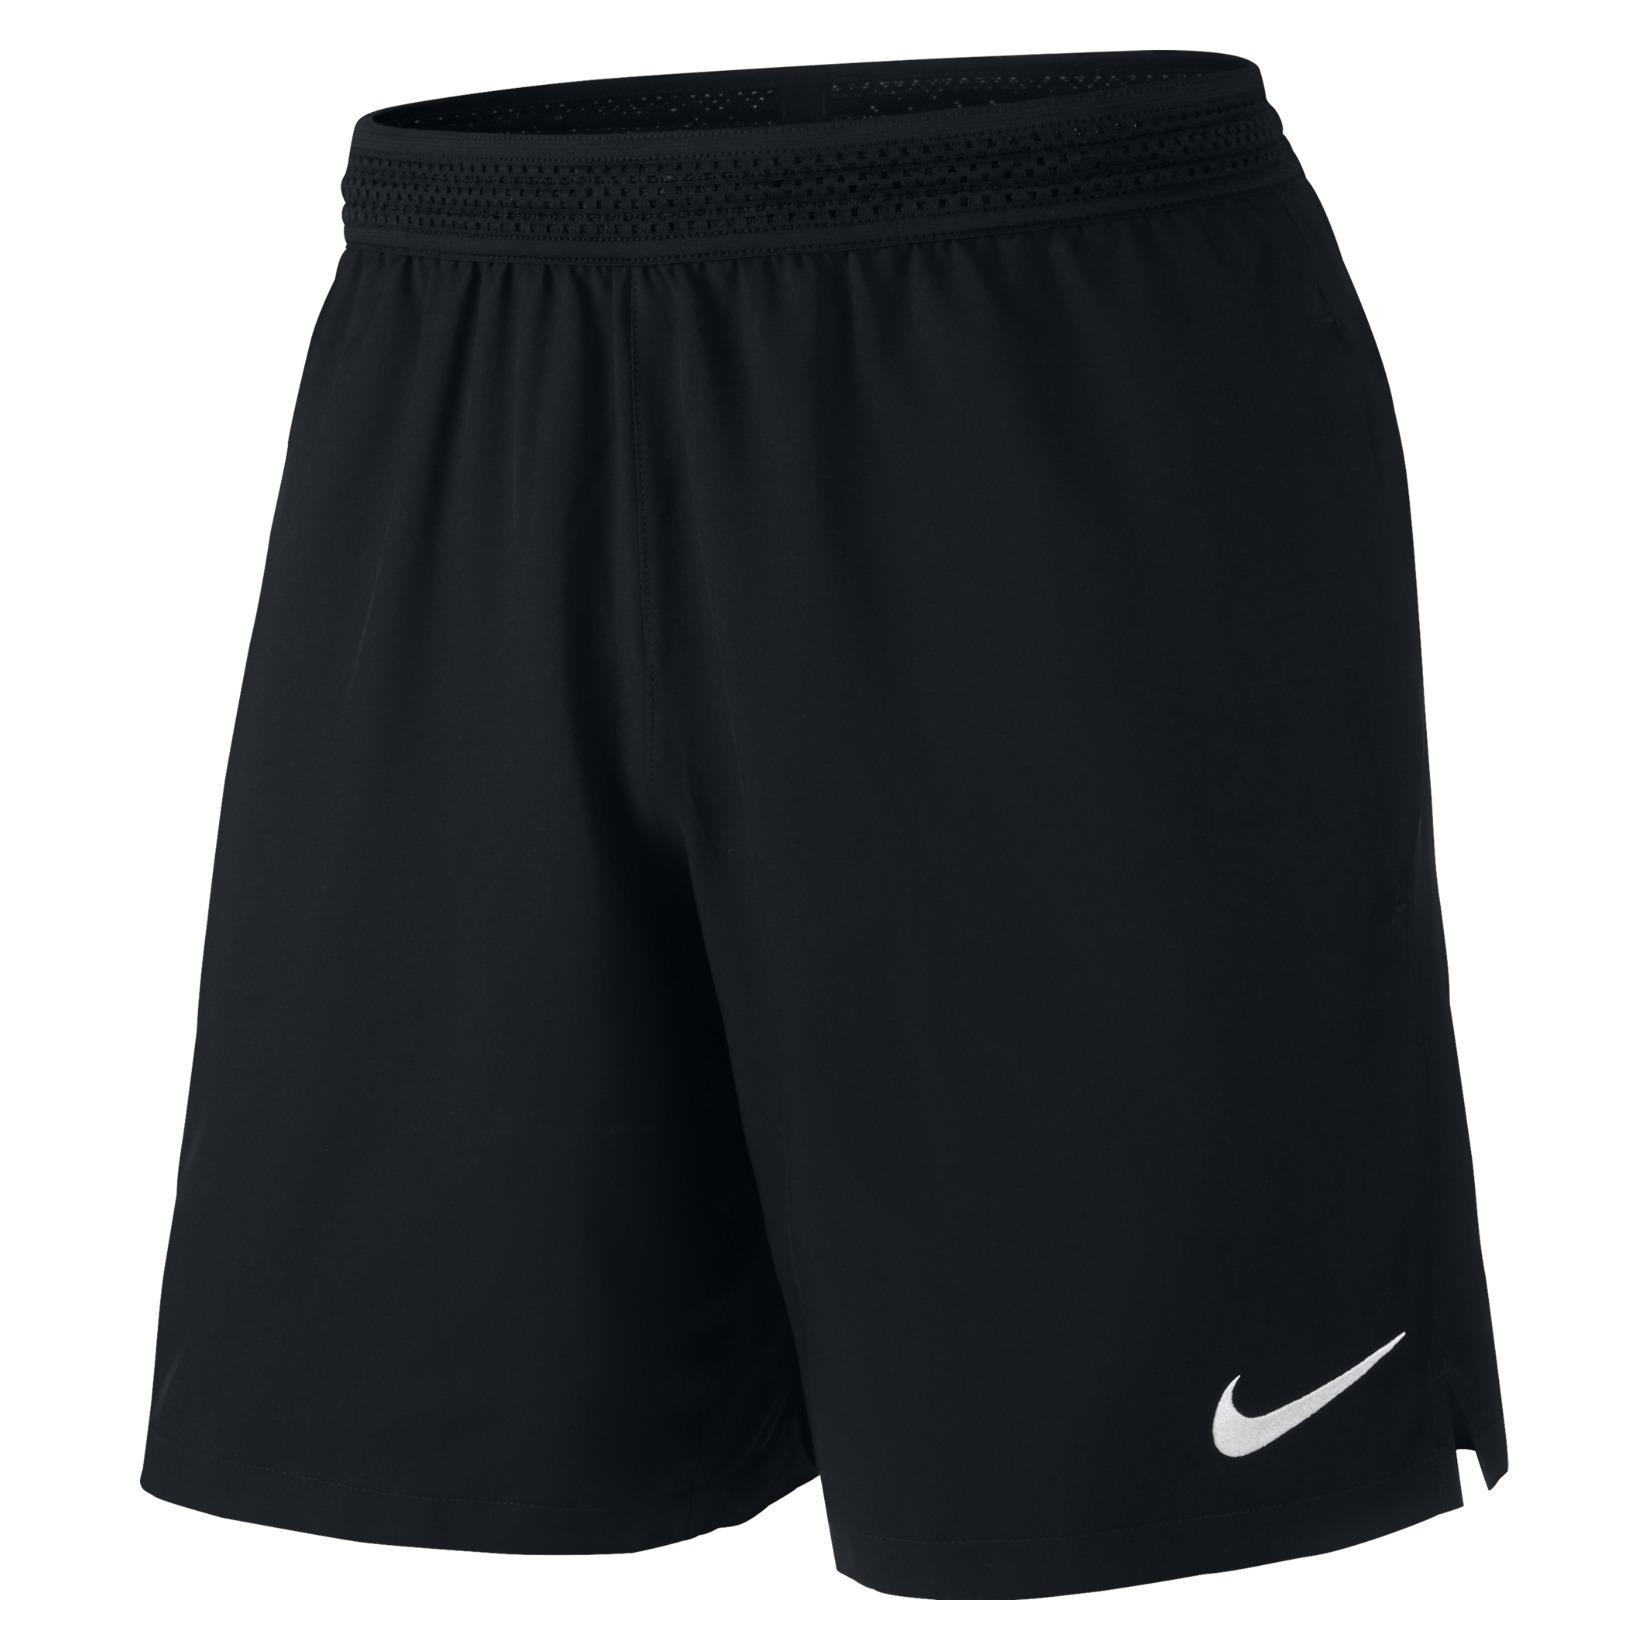 Black and White Nike Football Logo - Nike Football Team Referee Match Shorts - Kitlocker.com